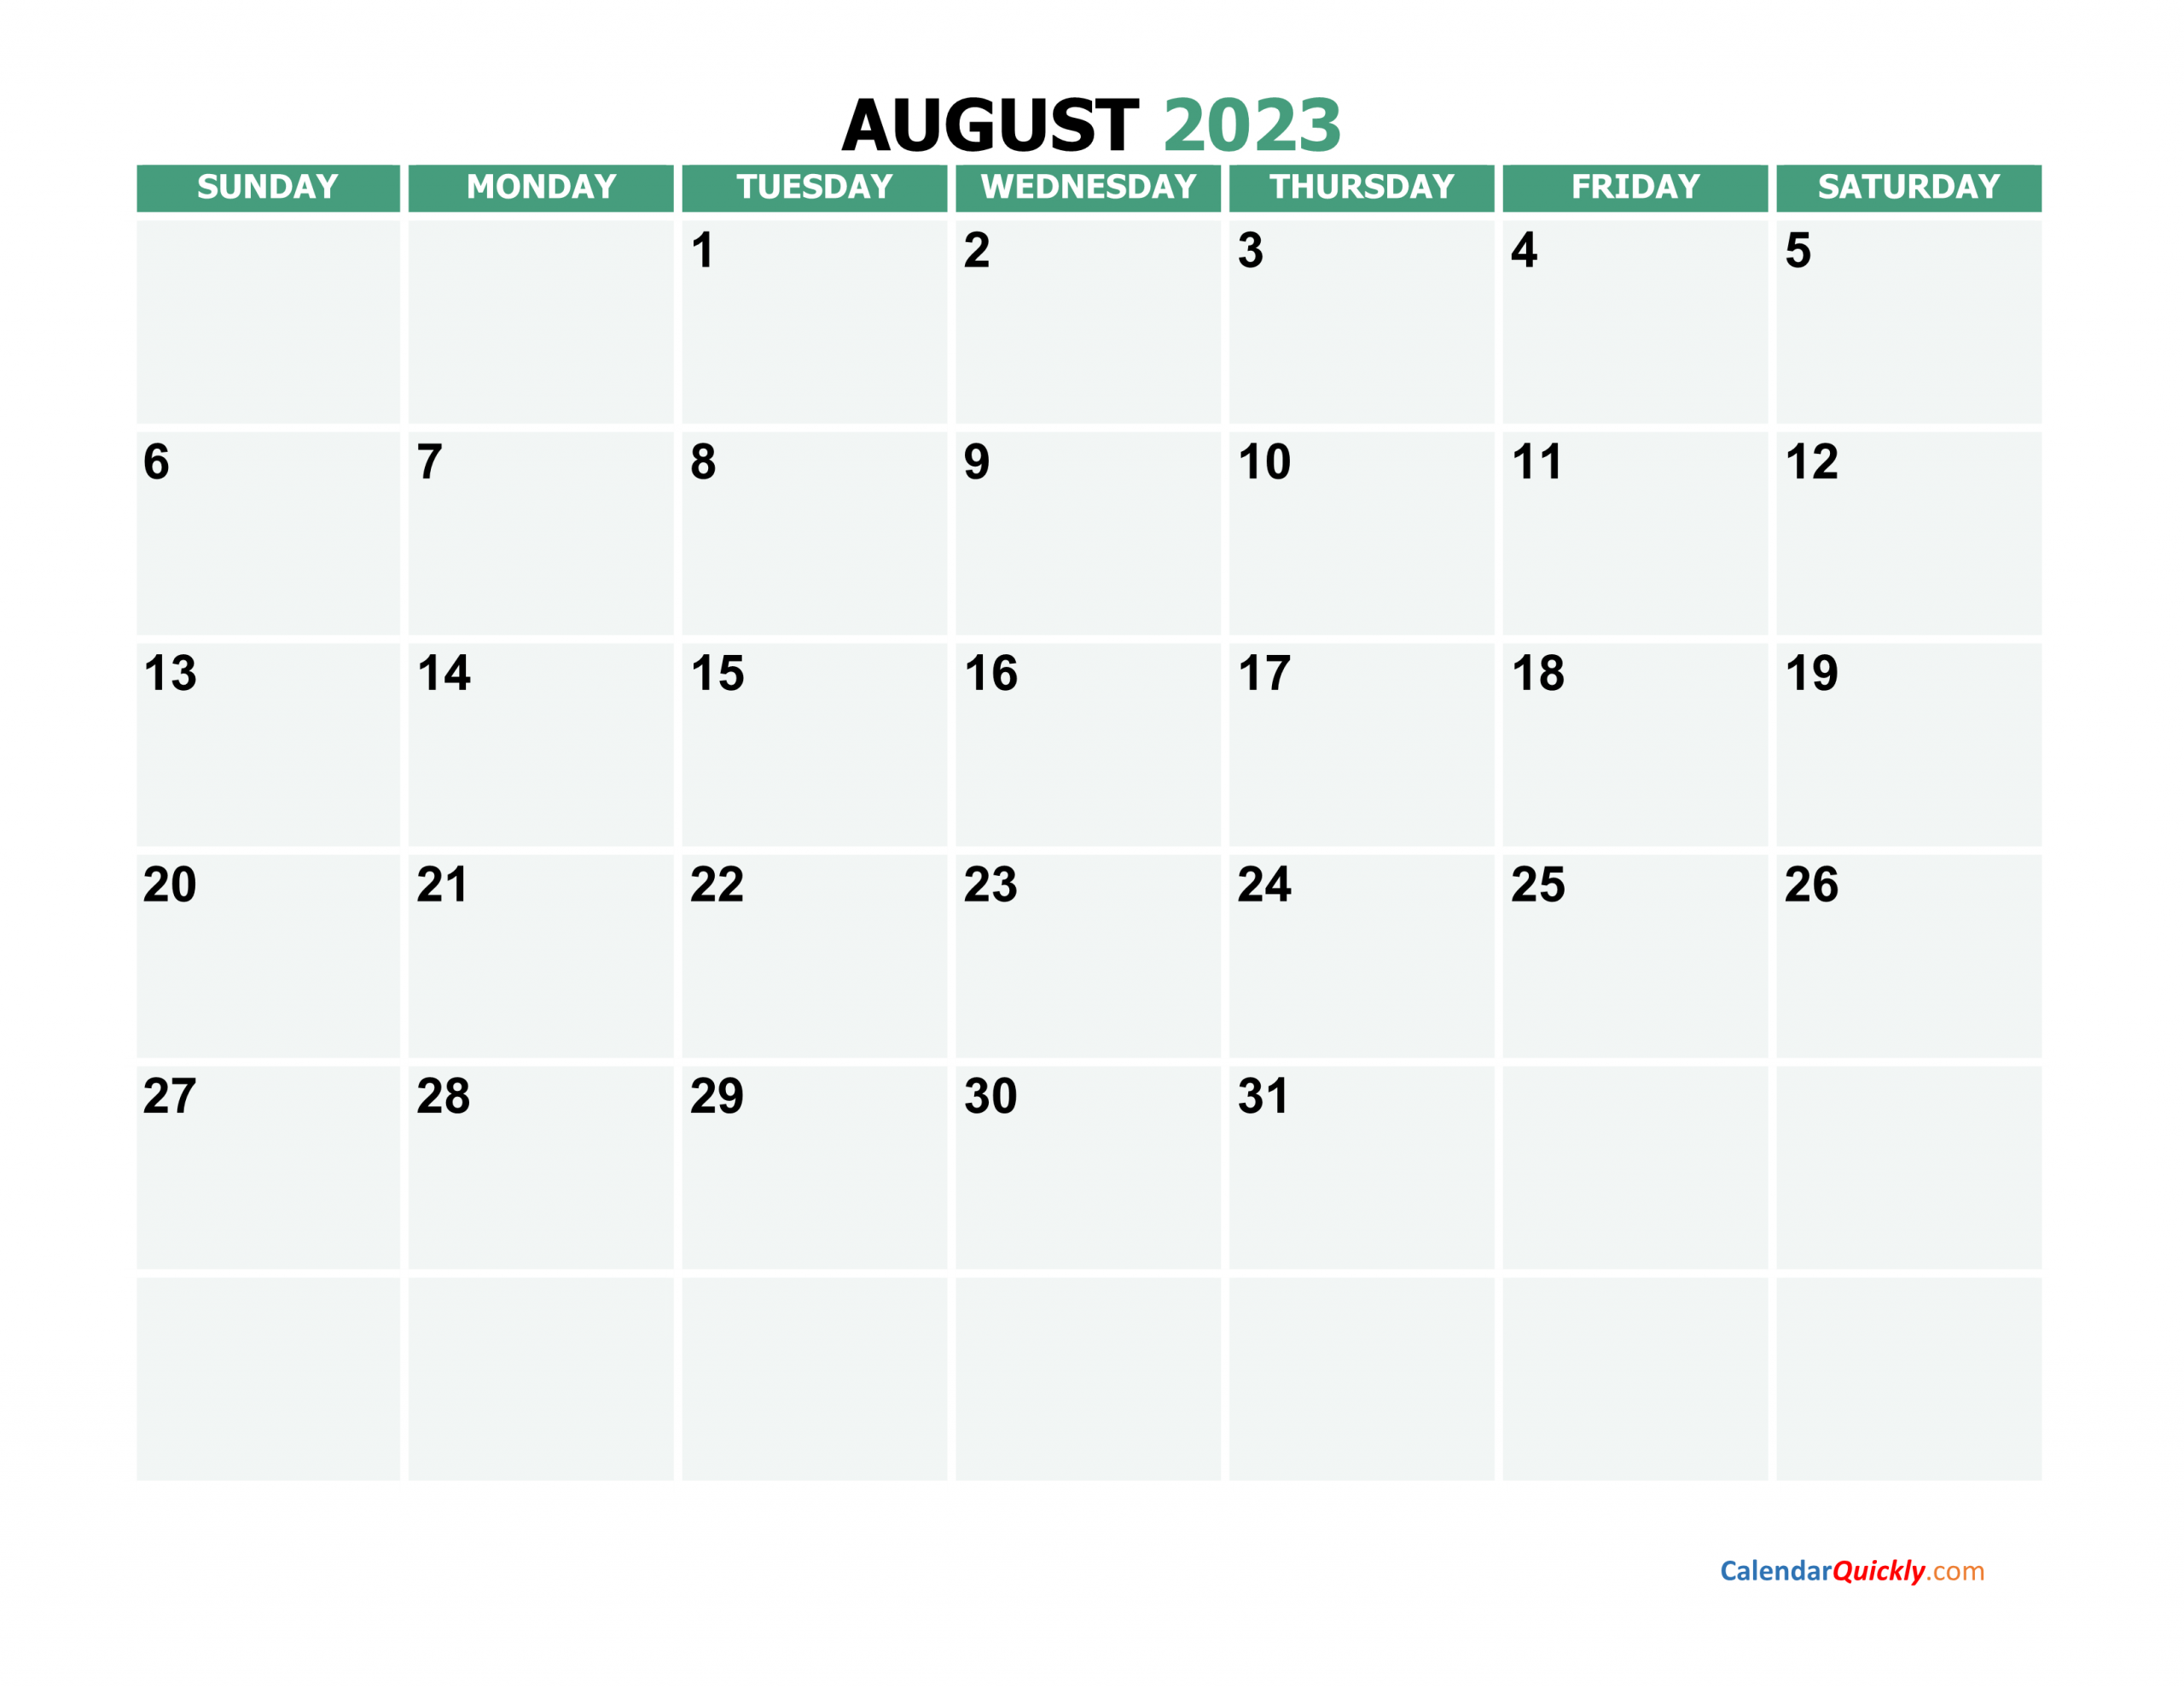 August 2023 Calendars | Calendar Quickly